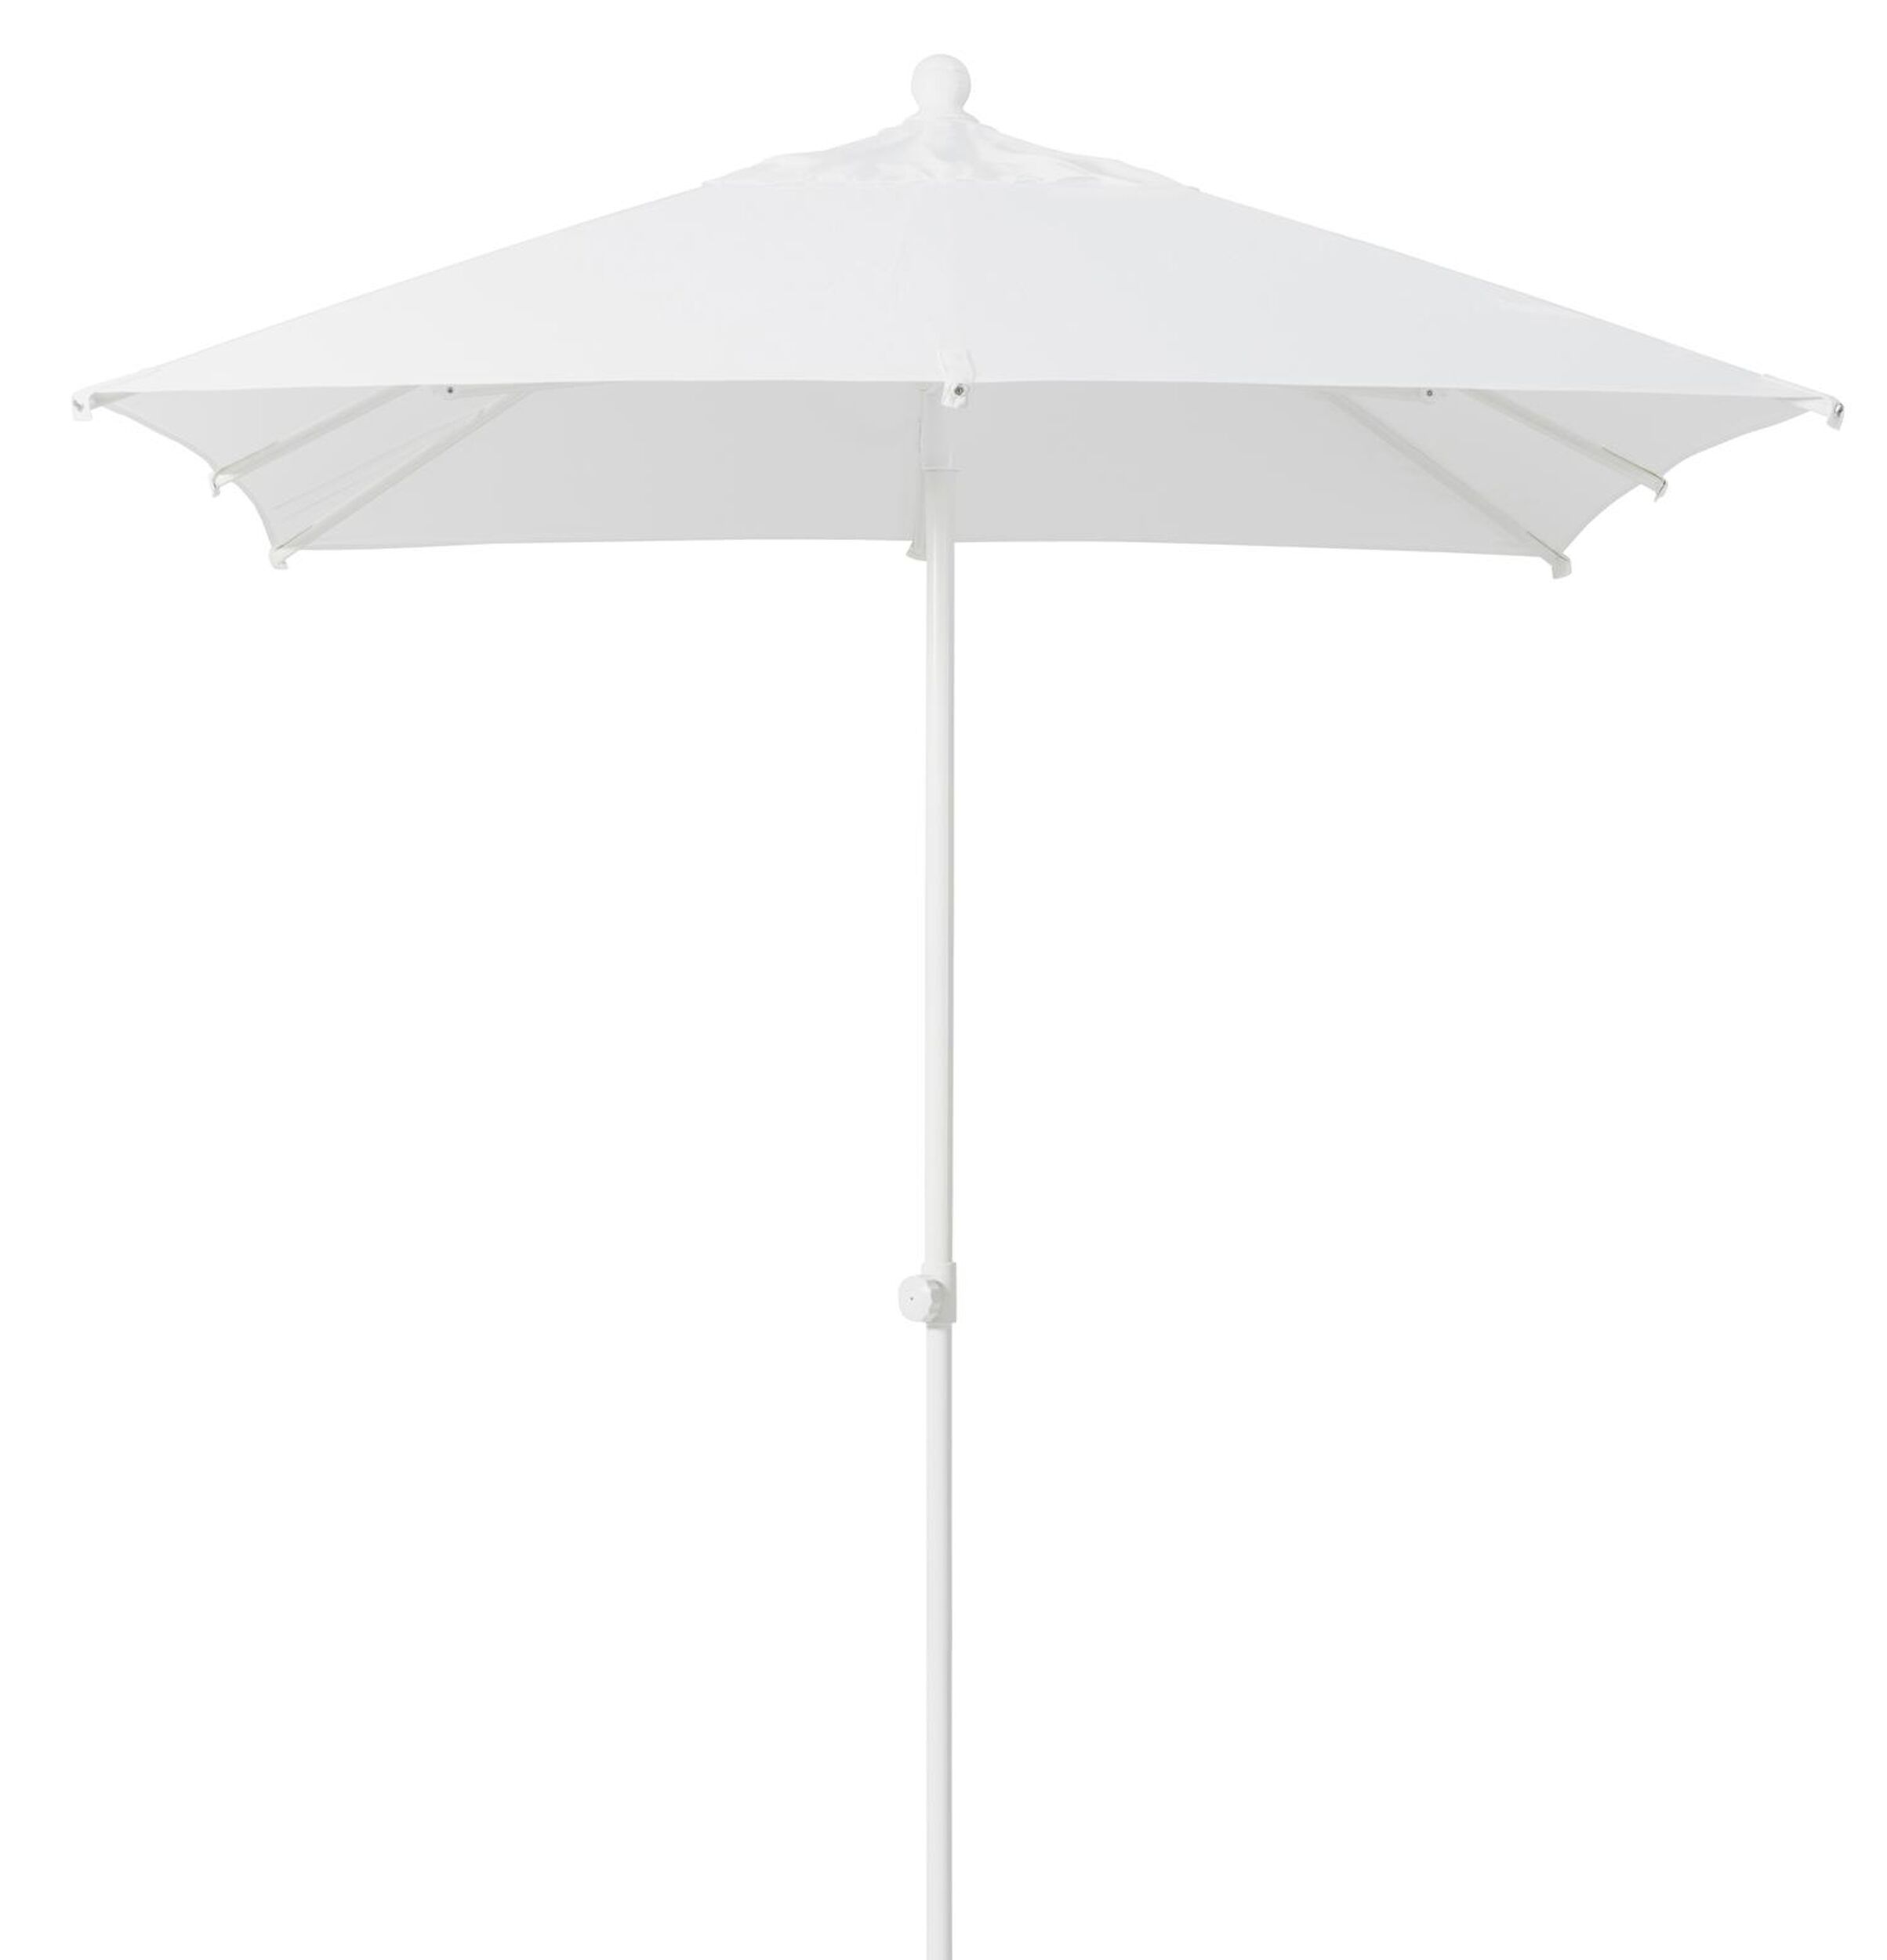 Milano staanparasol in wit aluminium wit polyester parasoldoek - L1 x L2 200 cm (zonder voet)